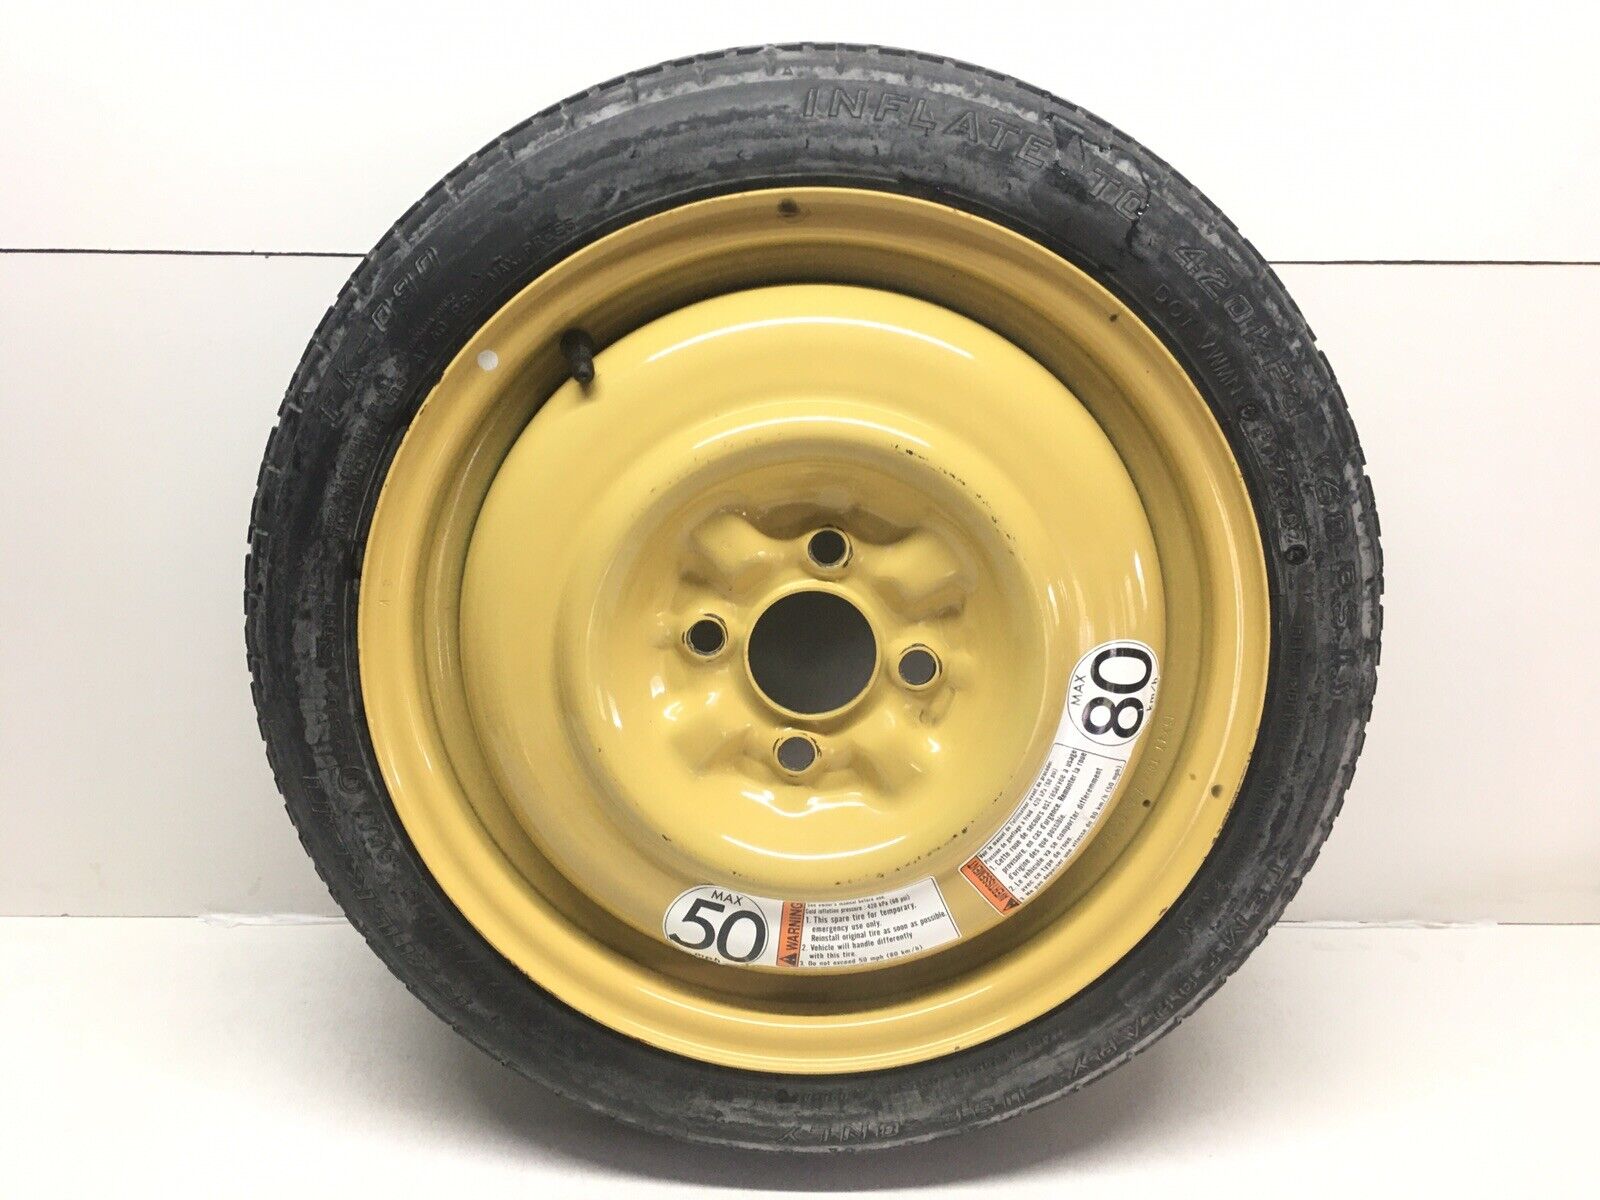 02 03 04 05 06 07 Suzuki Aerio Compact Spare Tire Wheel Donut 15X4